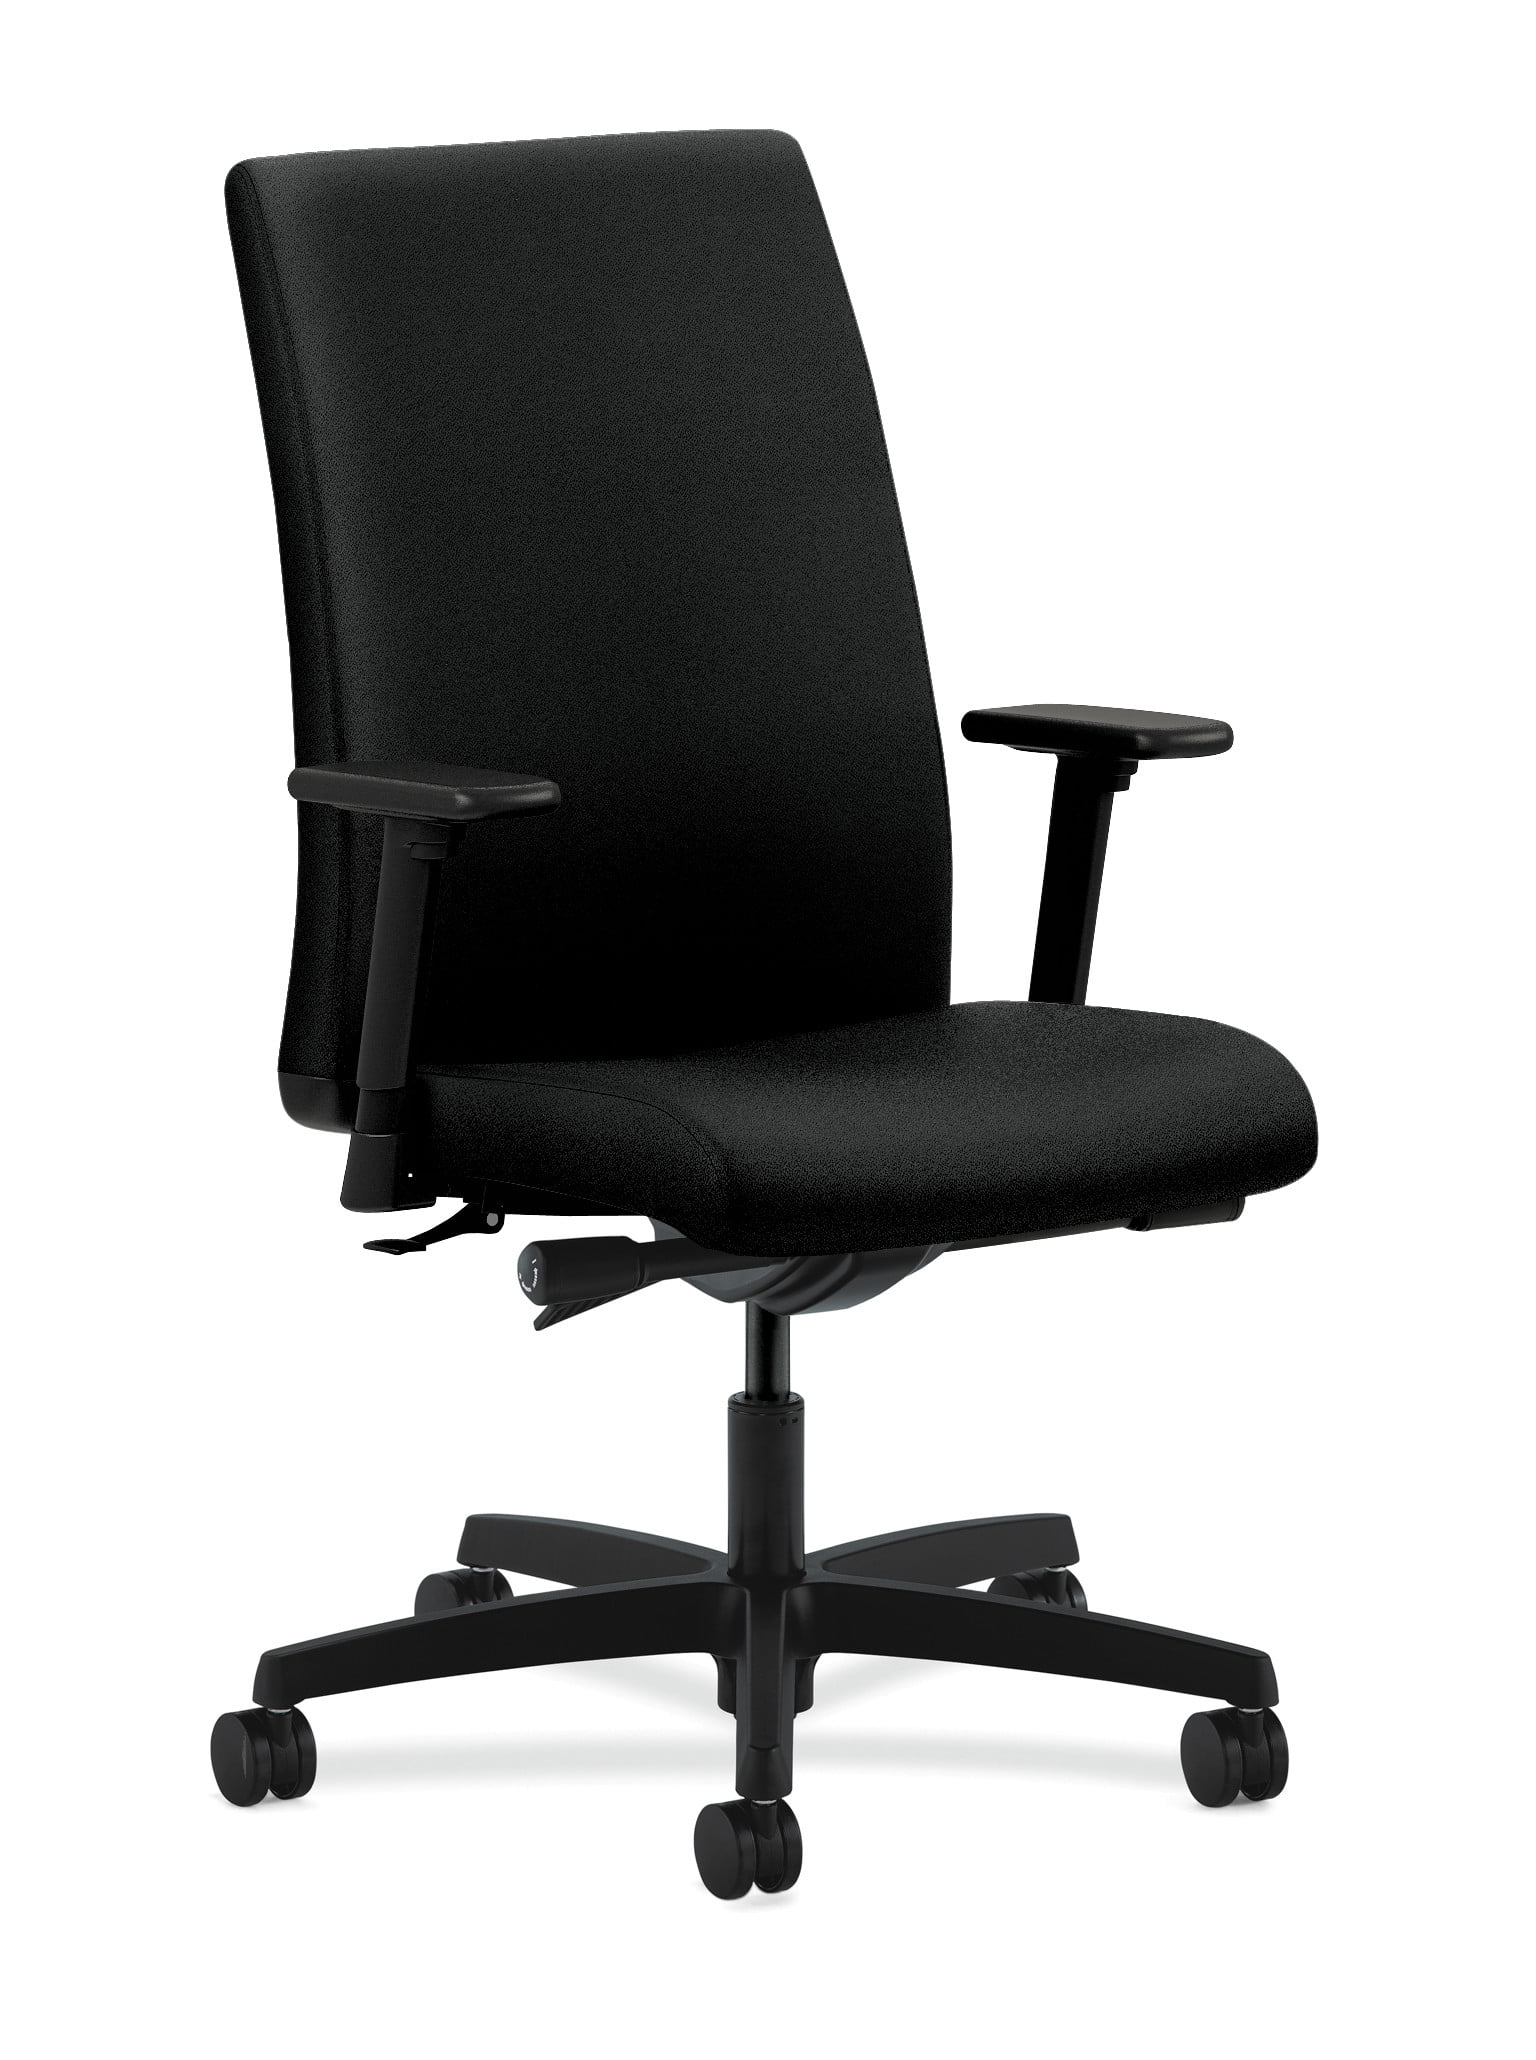 HON Ignition Mid-Back Task Chair, in Black (HIWM2) - Walmart.com